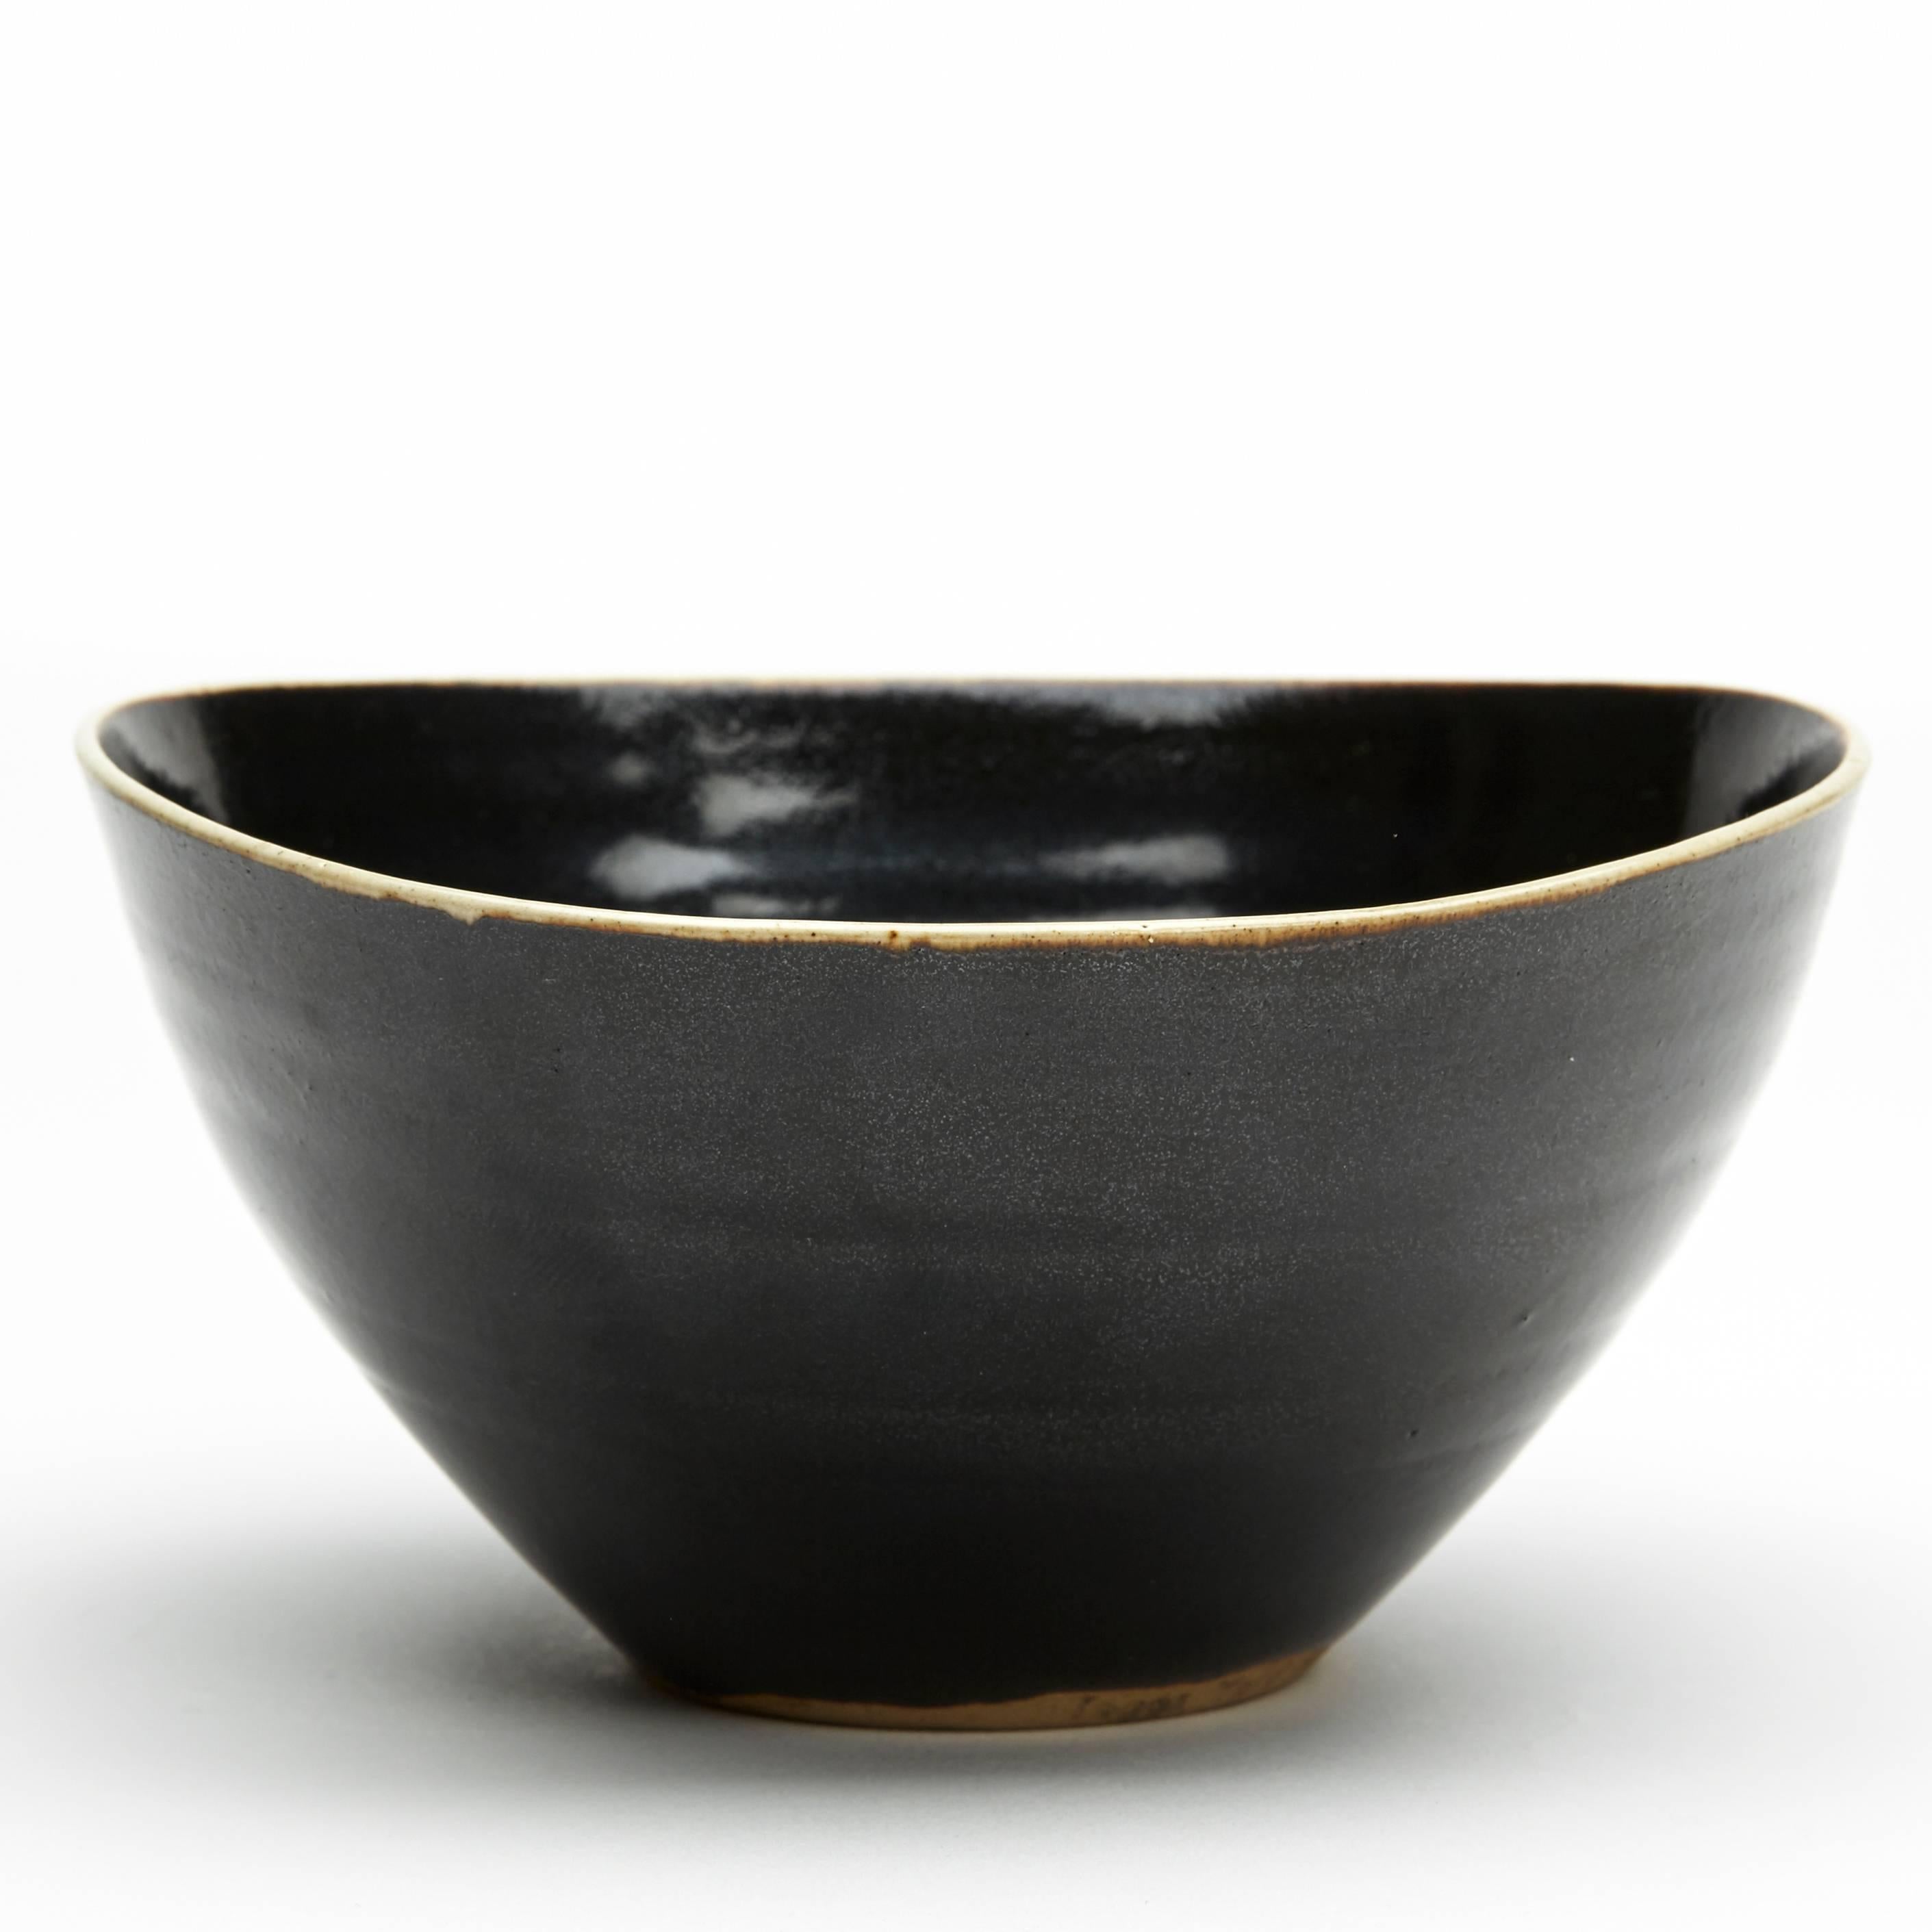 Lucie Rie and Hans Coper Studio Pottery Black Glazed Bowl 2